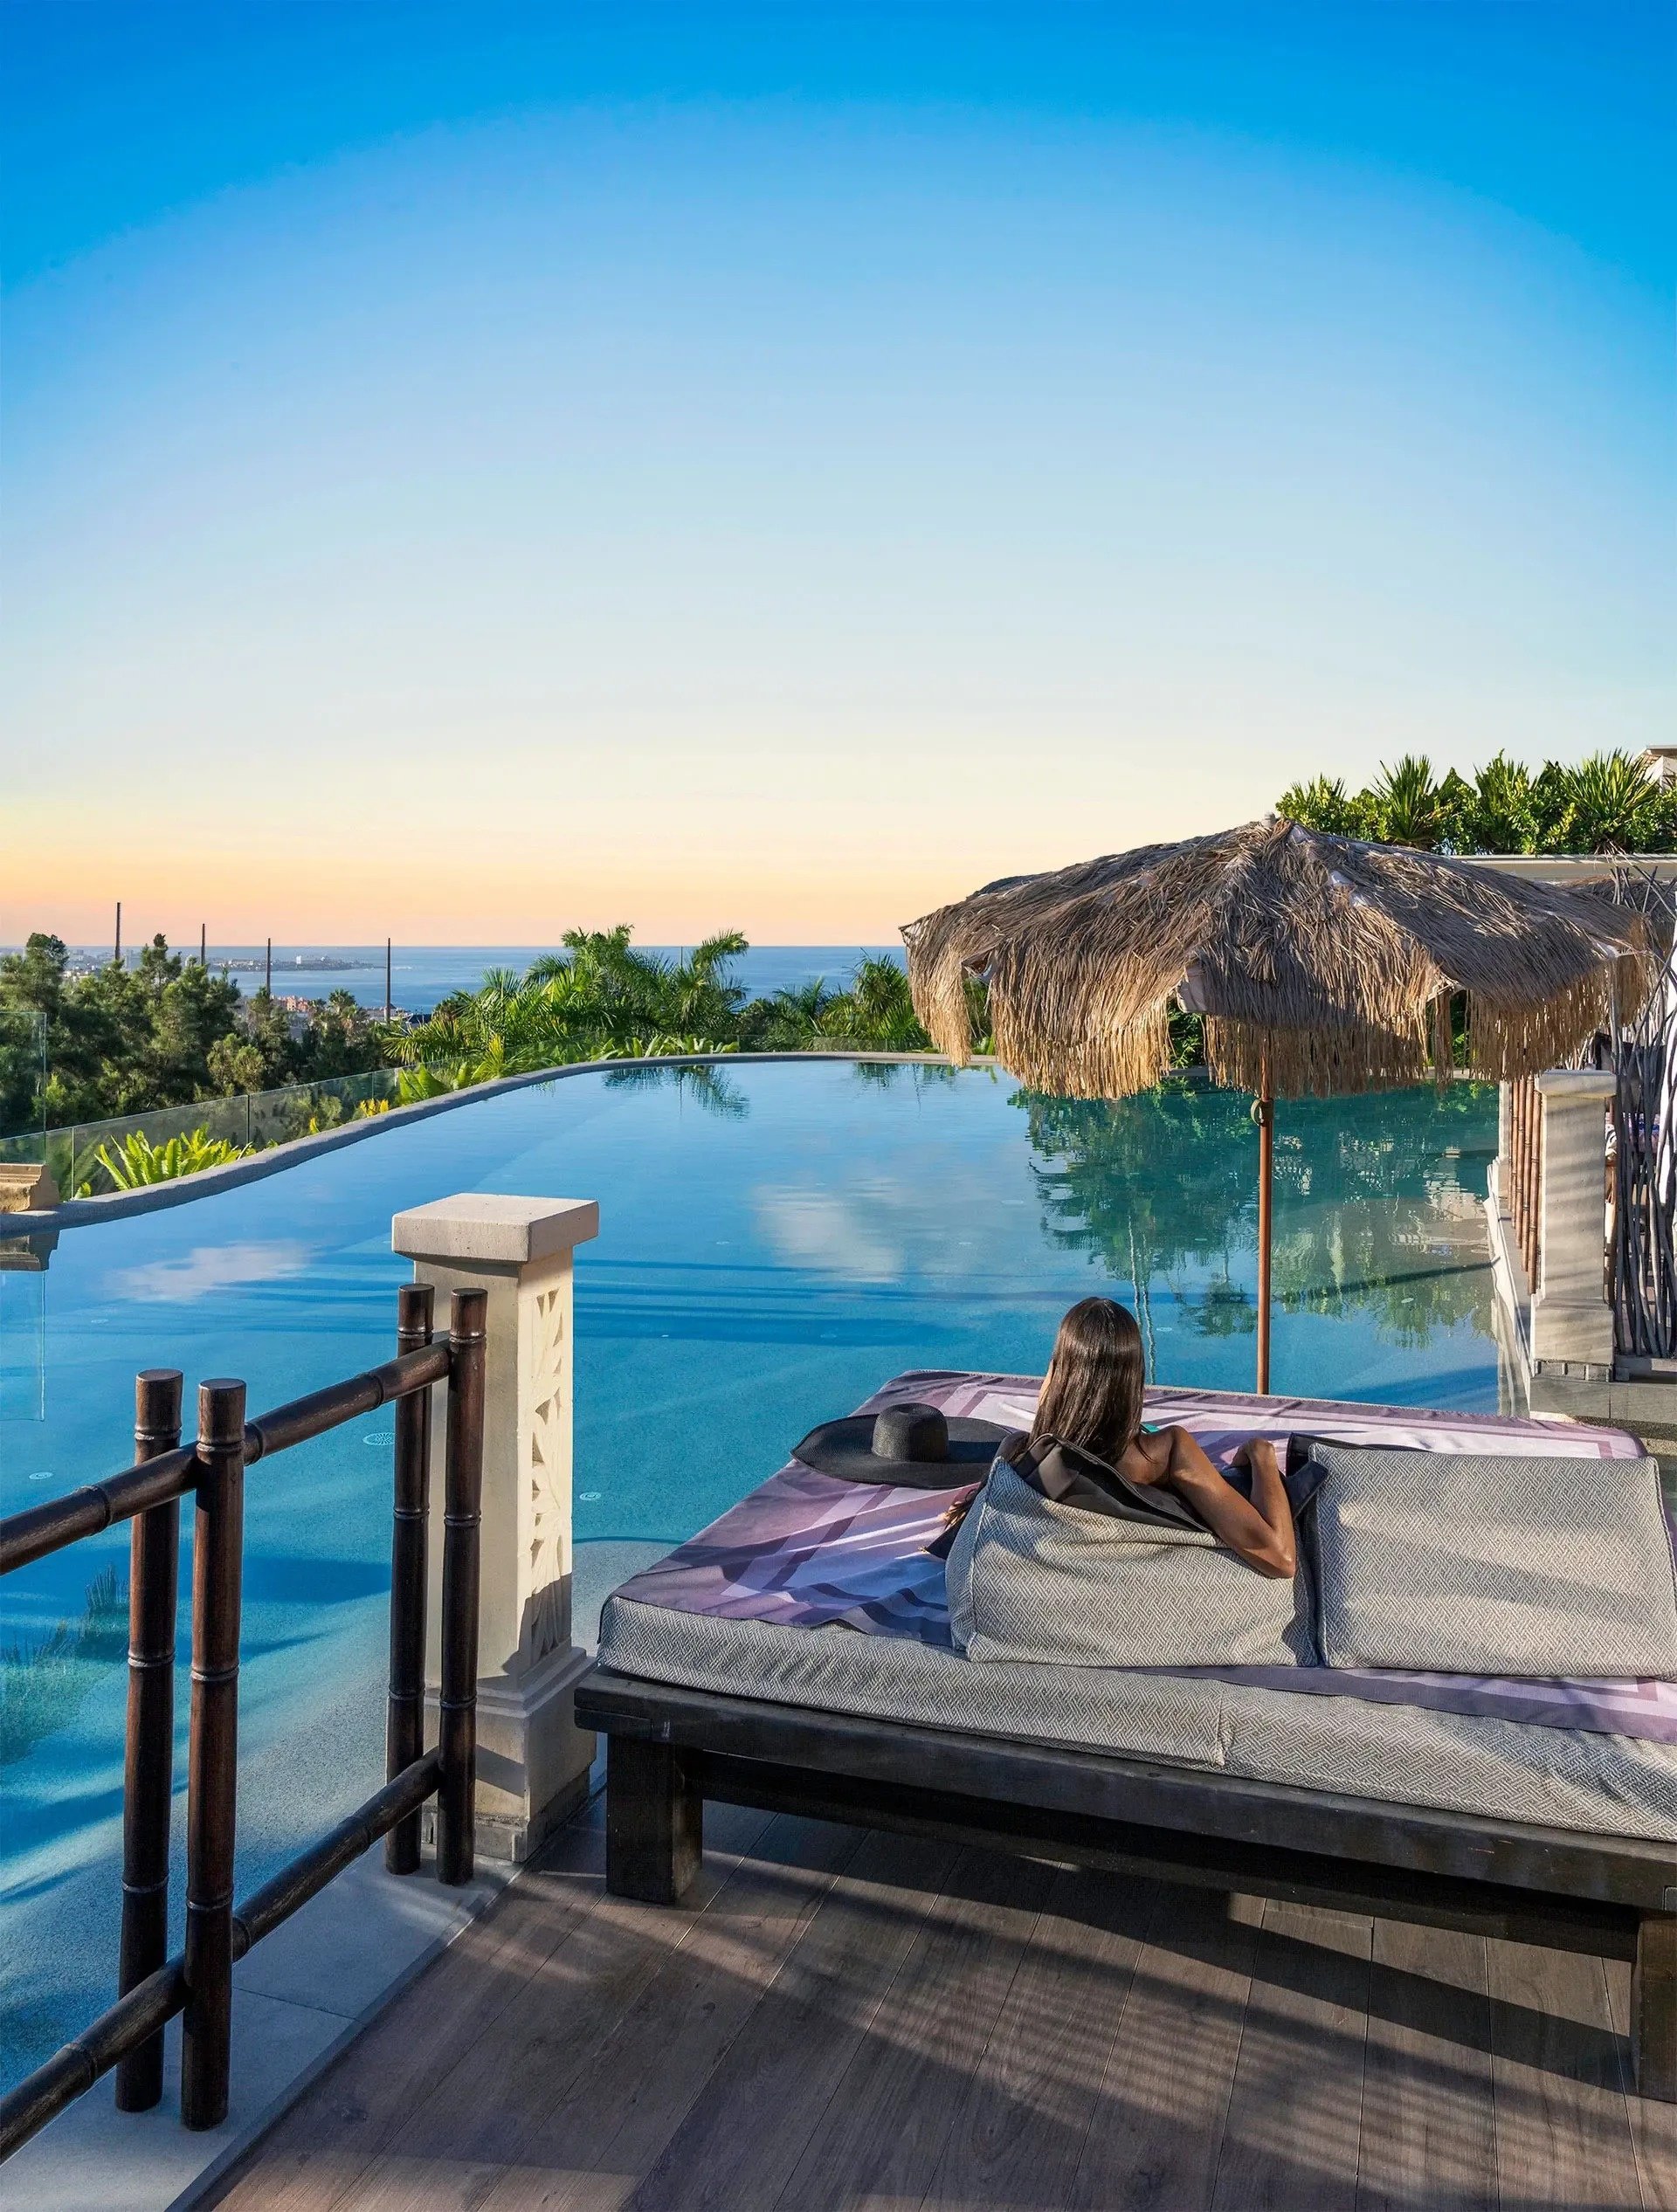 Royal River Luxury Hotel Best Hotel in Spain - Lagoon Villas 
